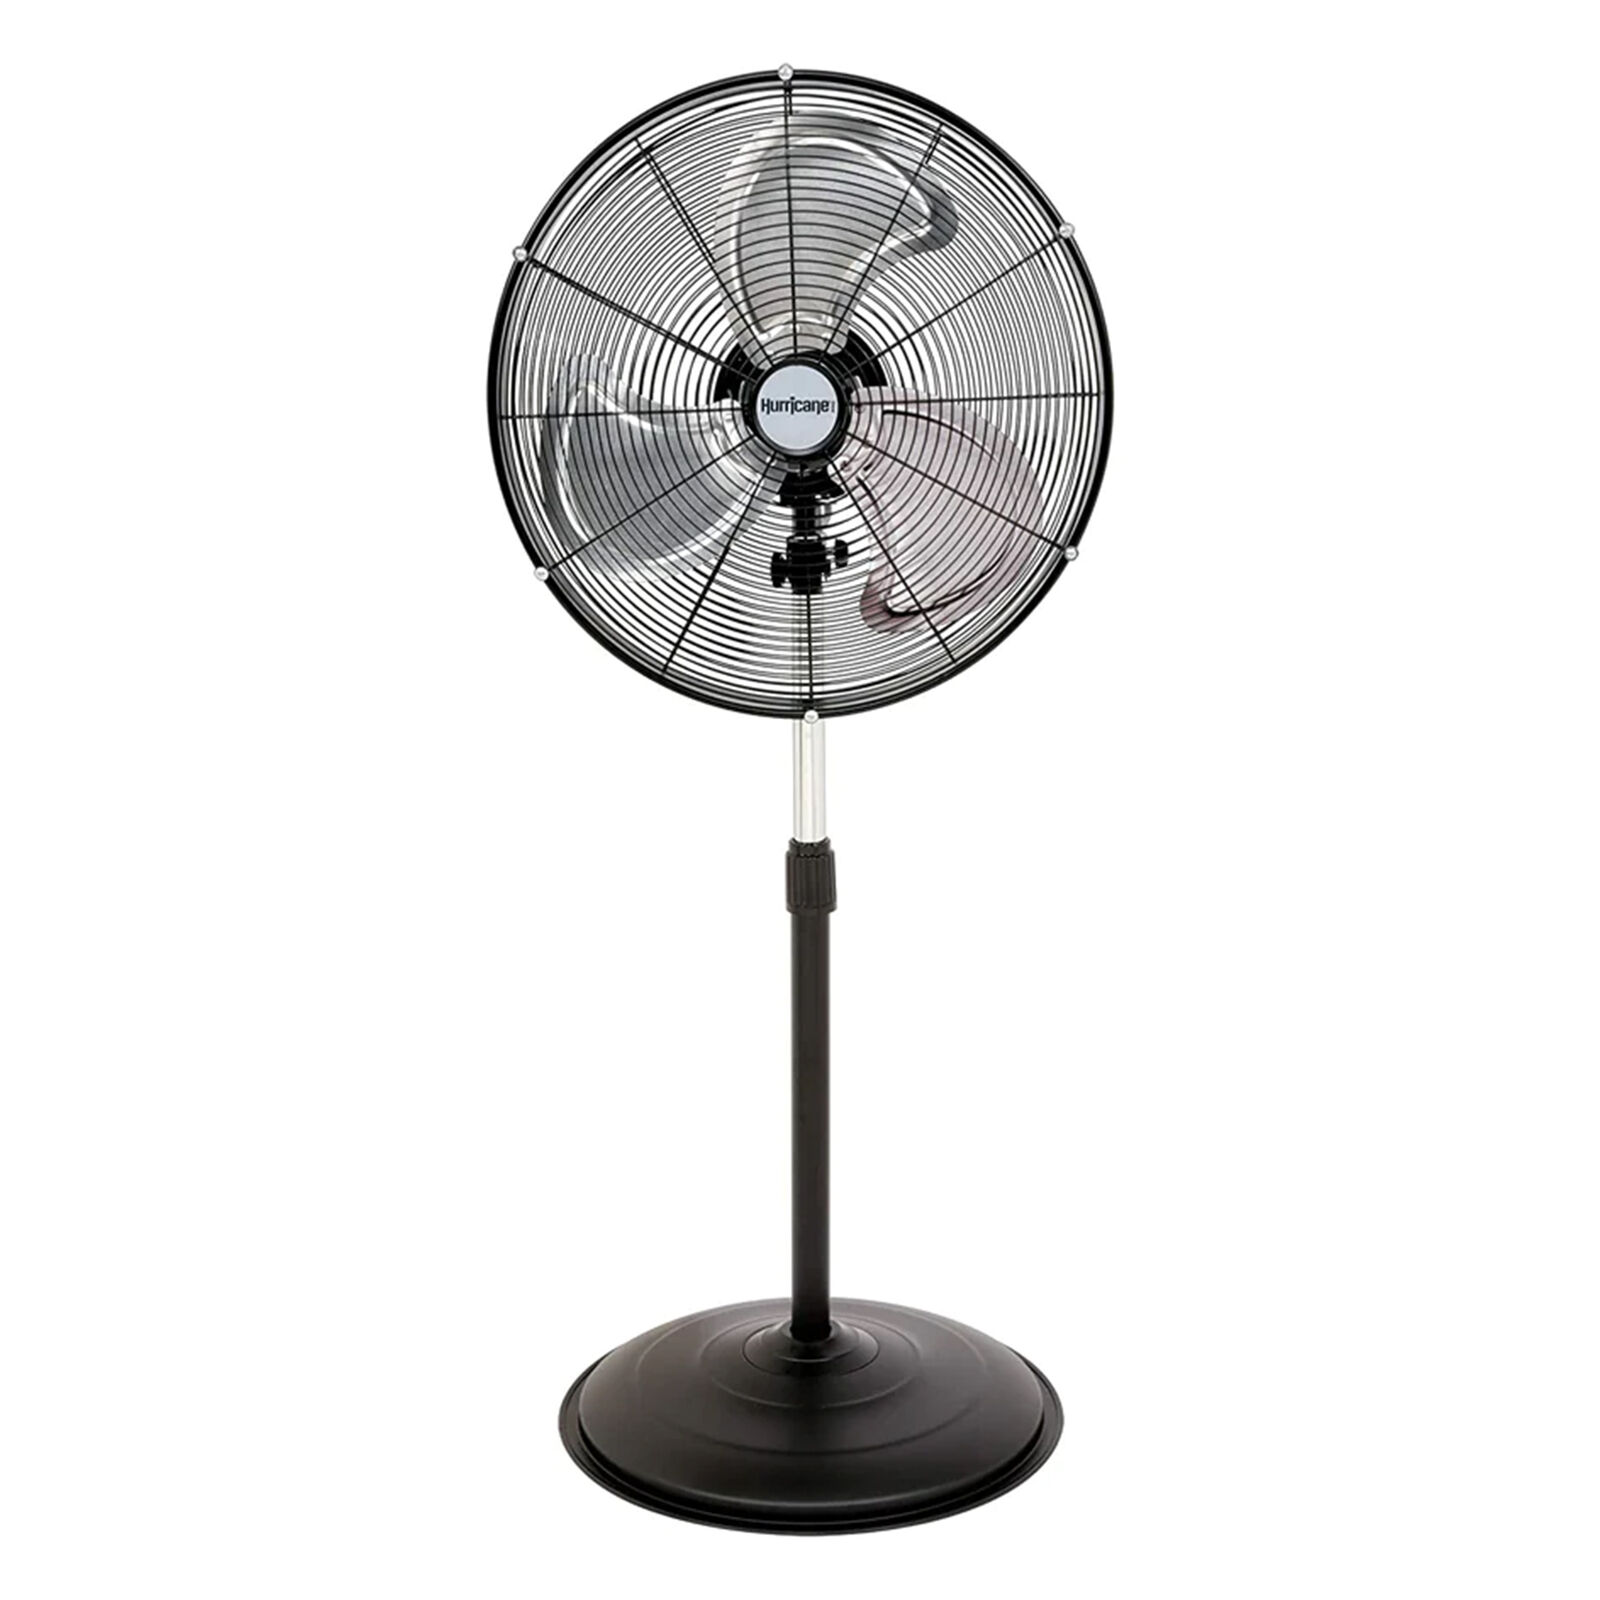 Hurricane Pro Series 20 Inch High Velocity Oscillating Pedestal Stand Fan, Black